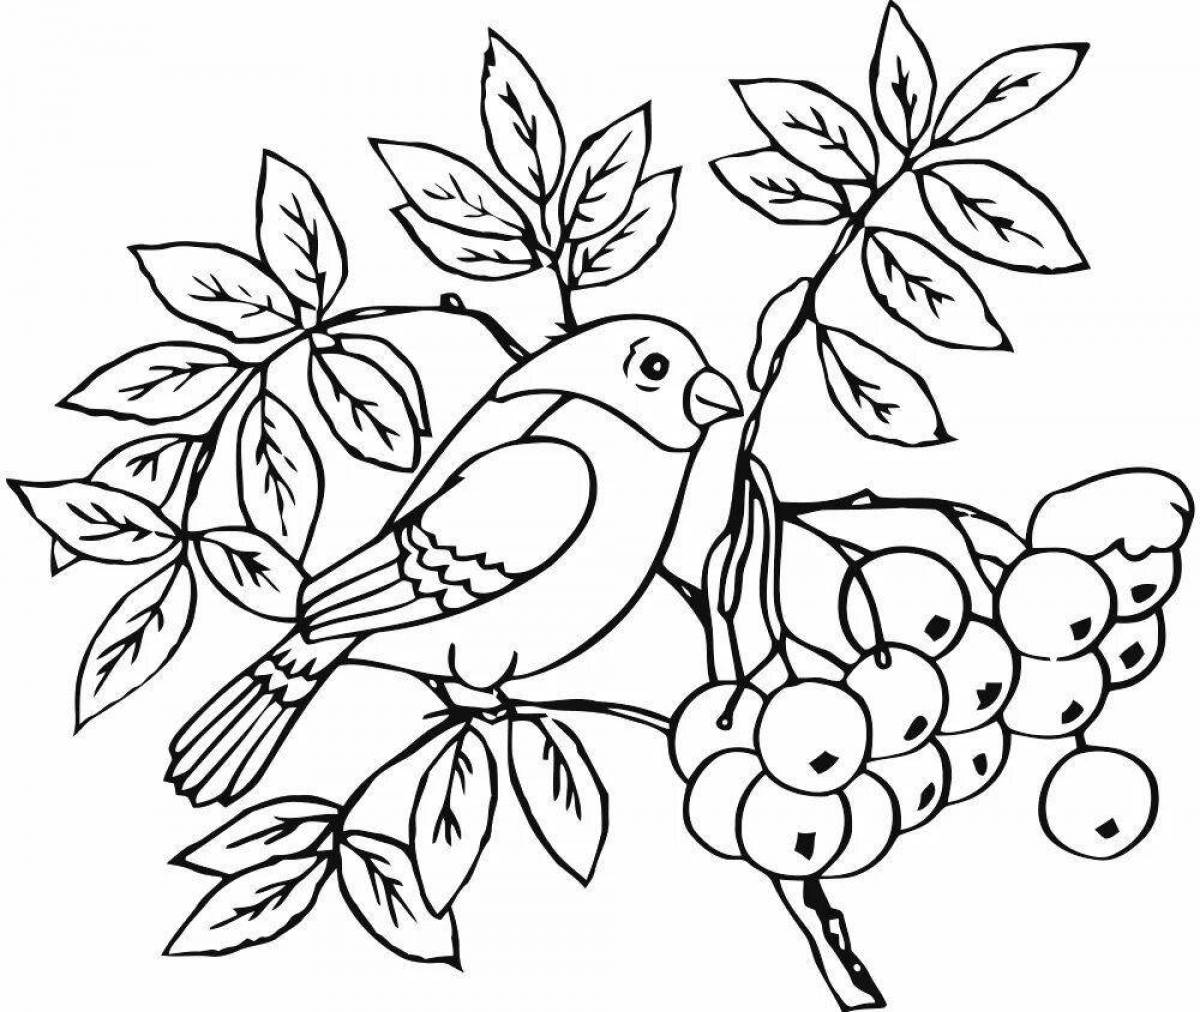 Detailed drawing of a bullfinch on a rowan branch